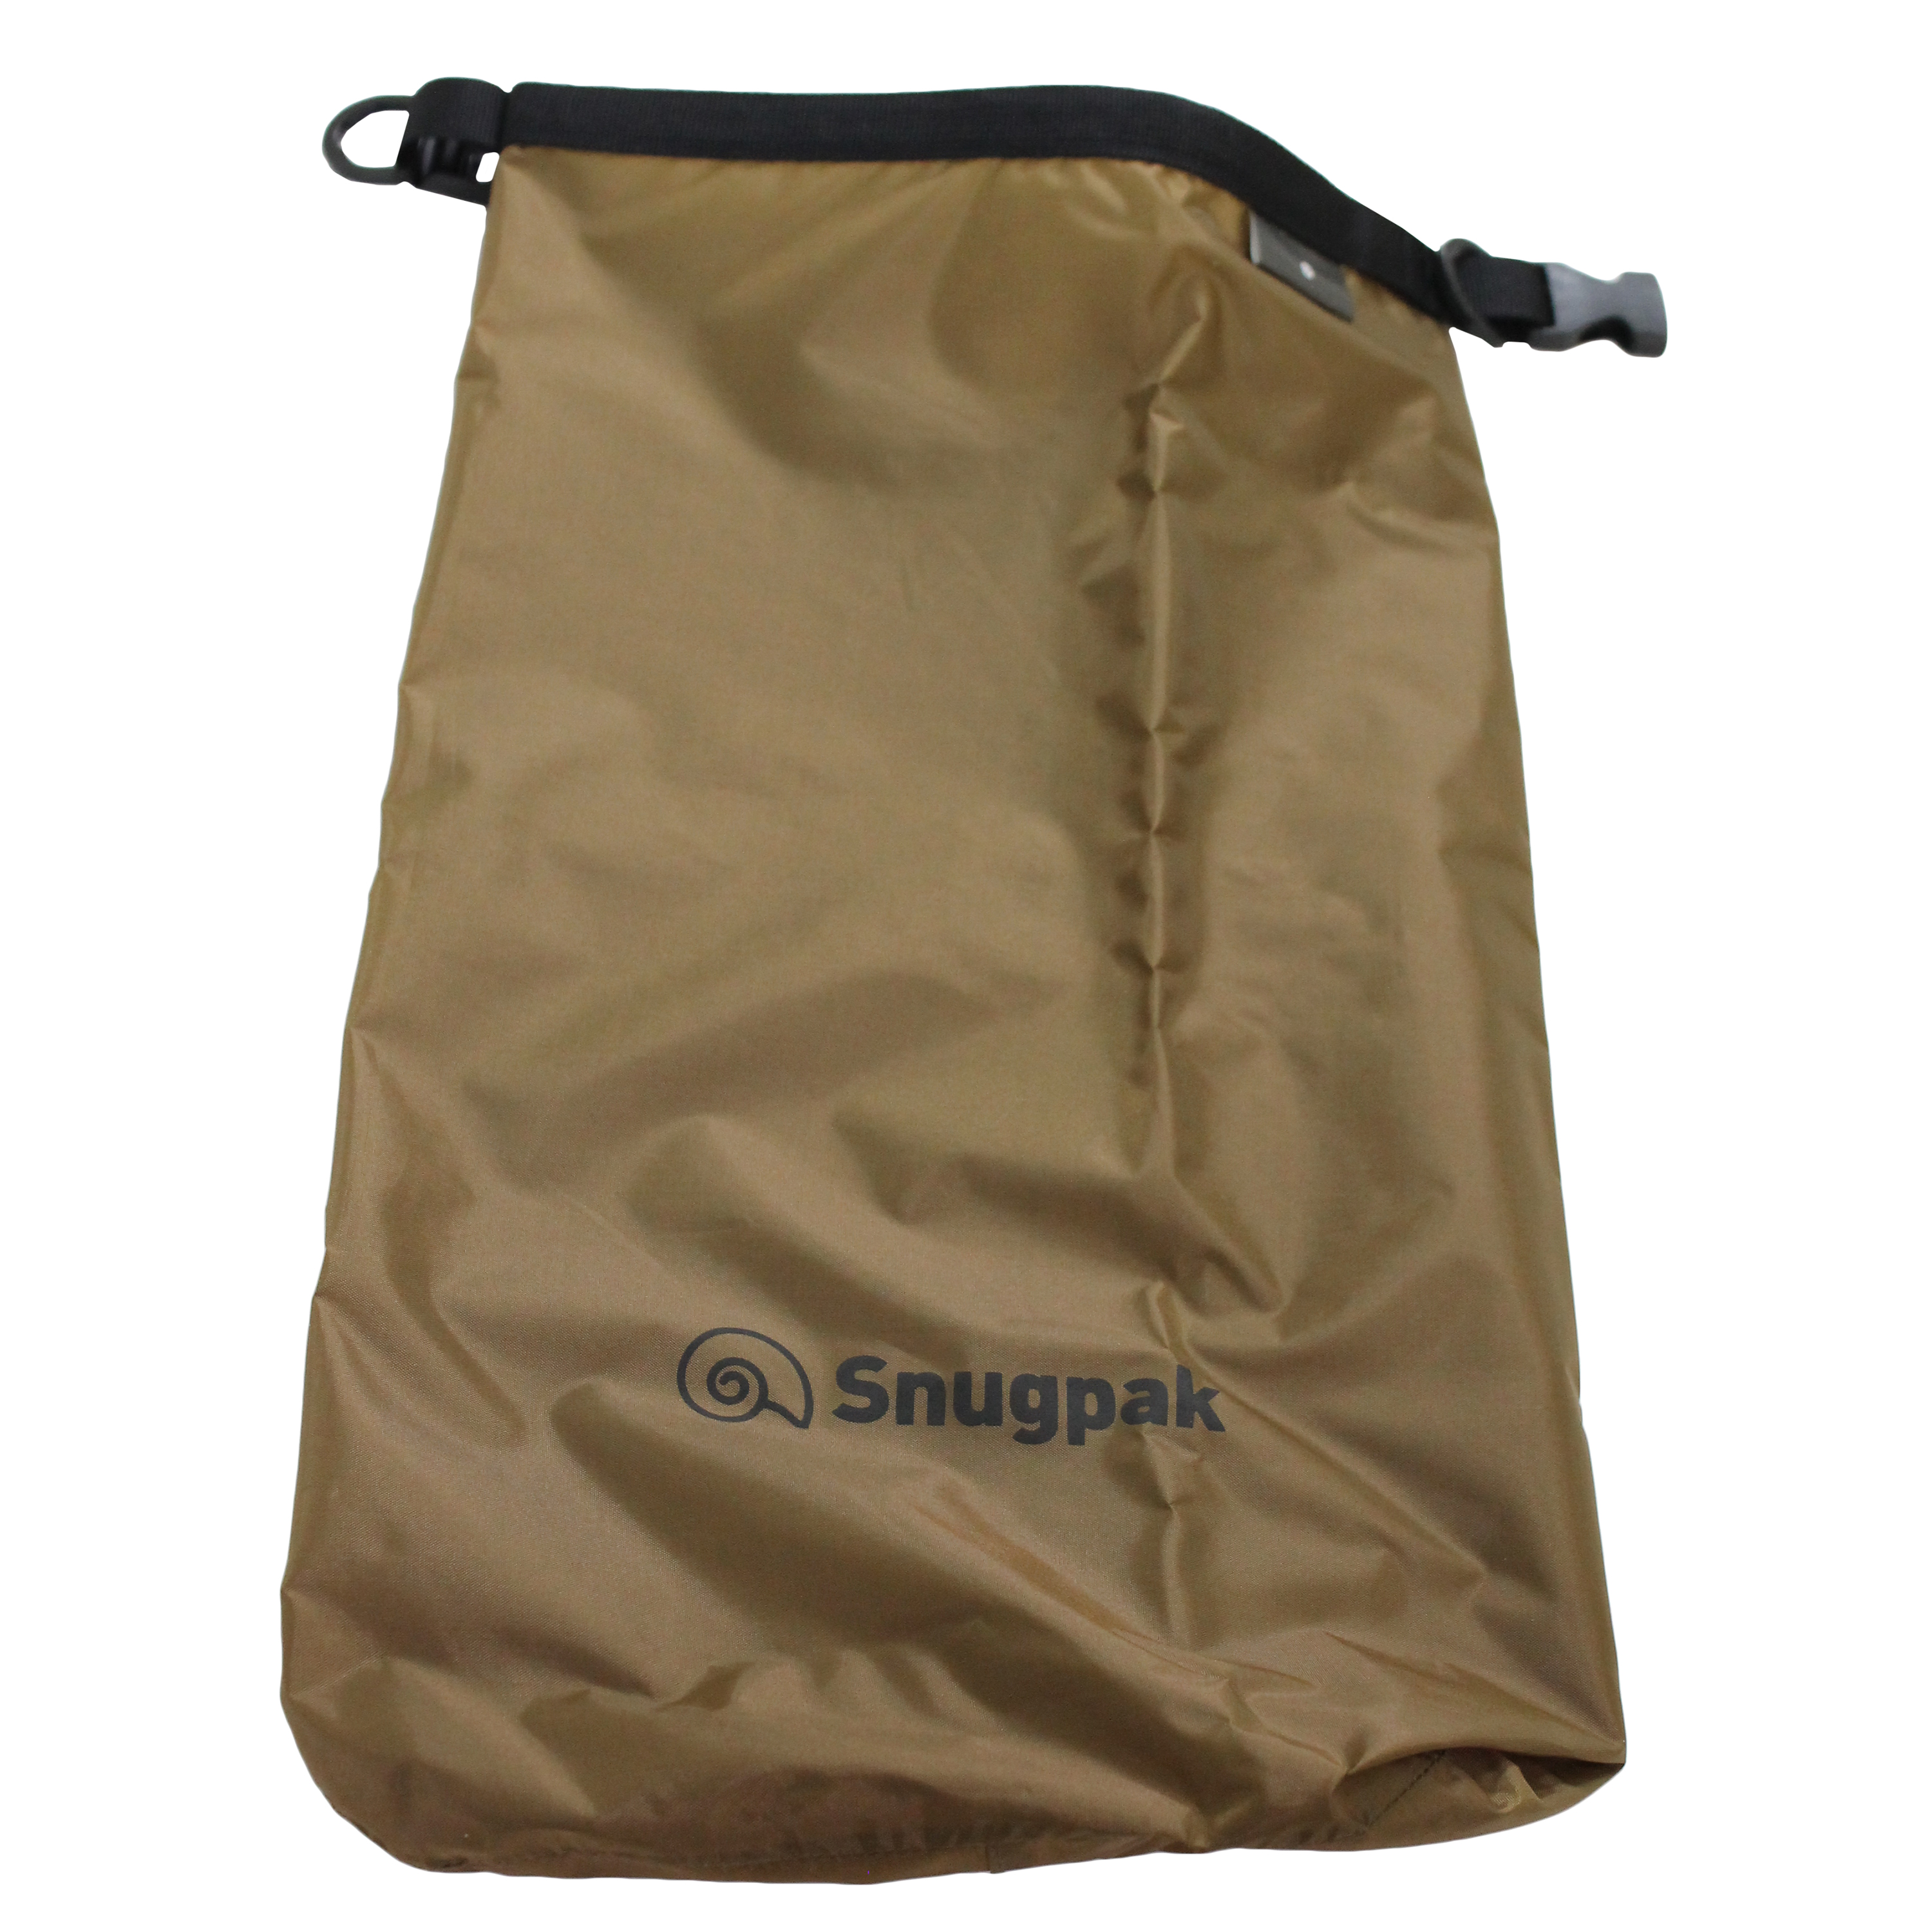 SnugPak Sleeping Bag Compression Sacks - image 1 of 6